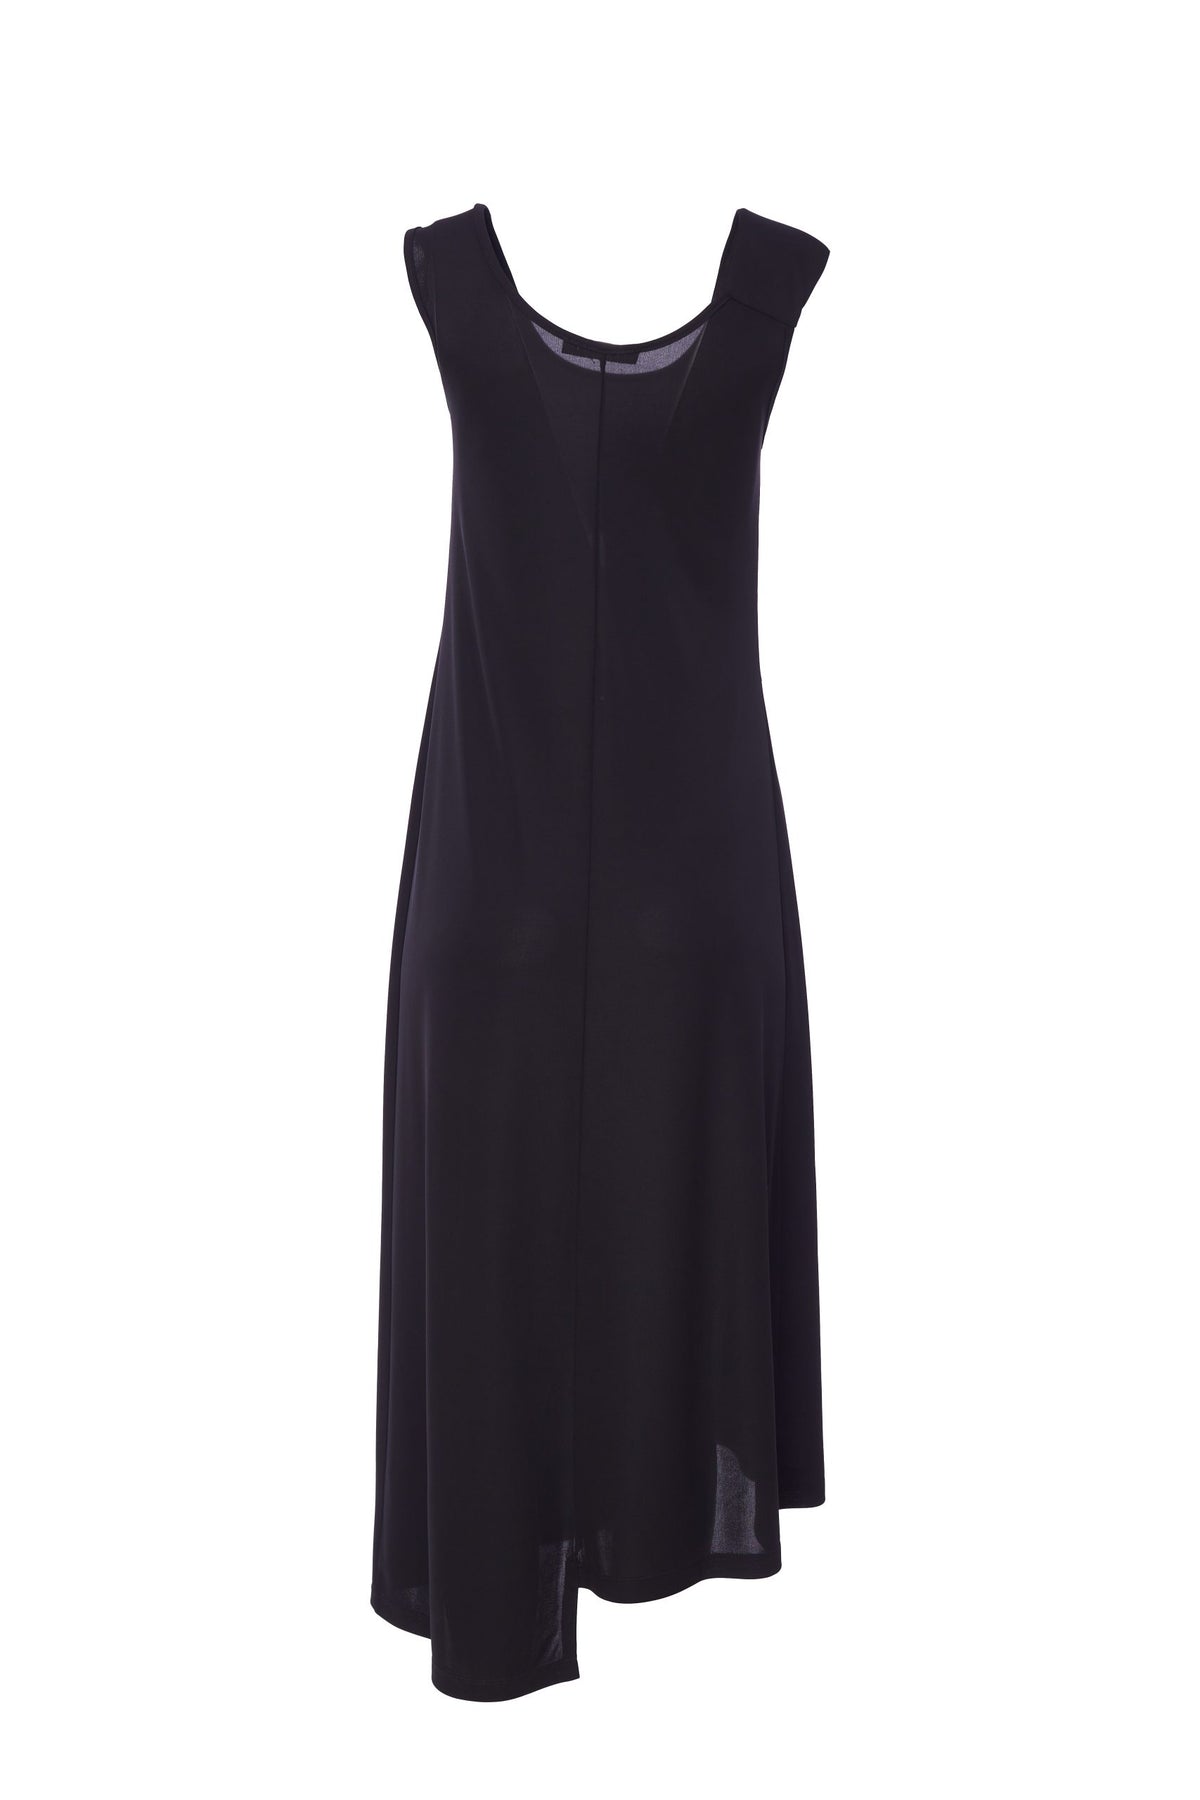 KCS24141 BLACK Kate Cooper Jersey Dress